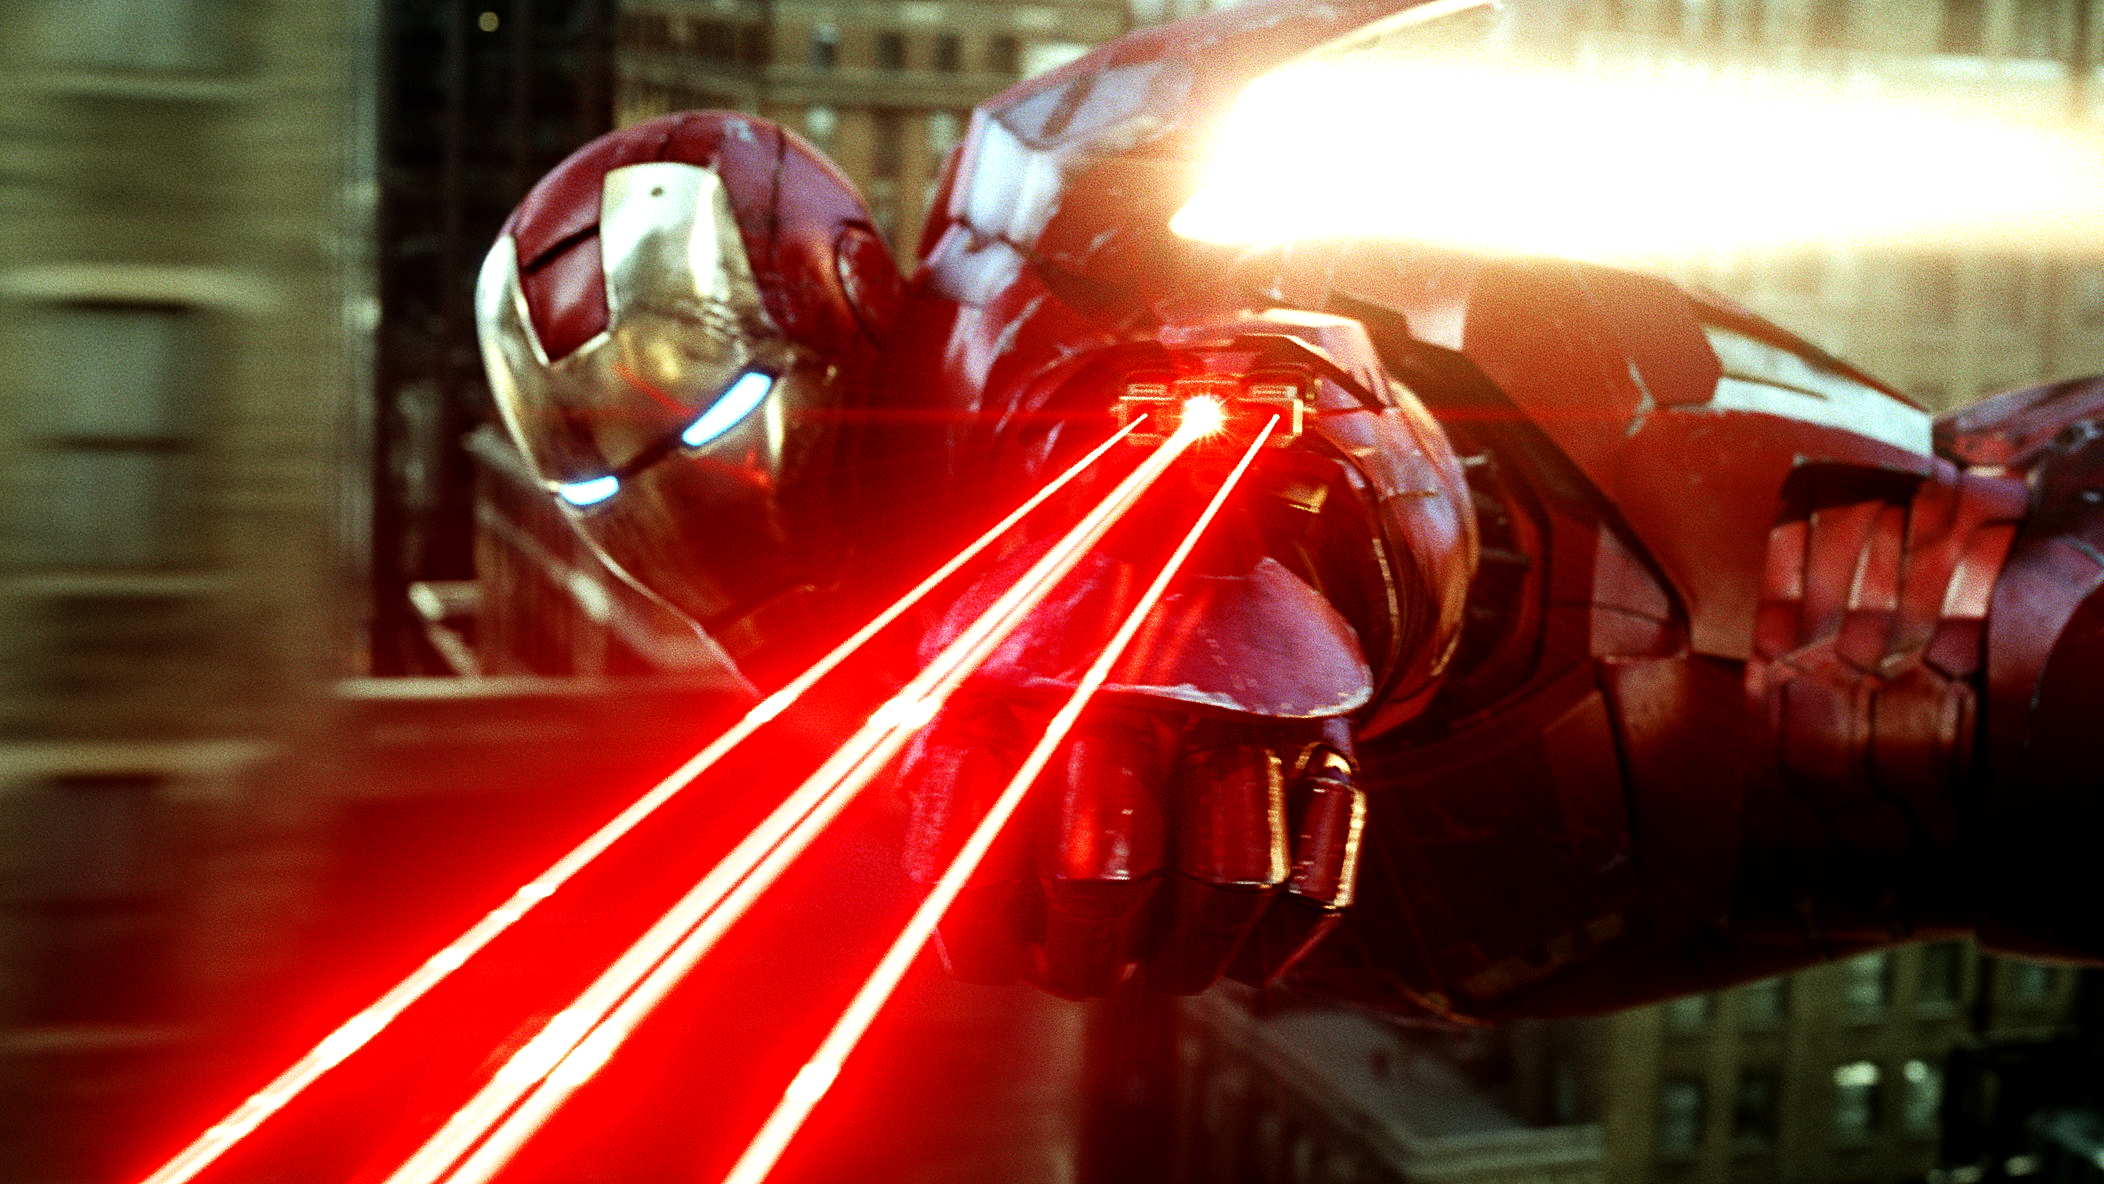 iron man hd wallpaper download,iron man,red,light,superhero,automotive lighting